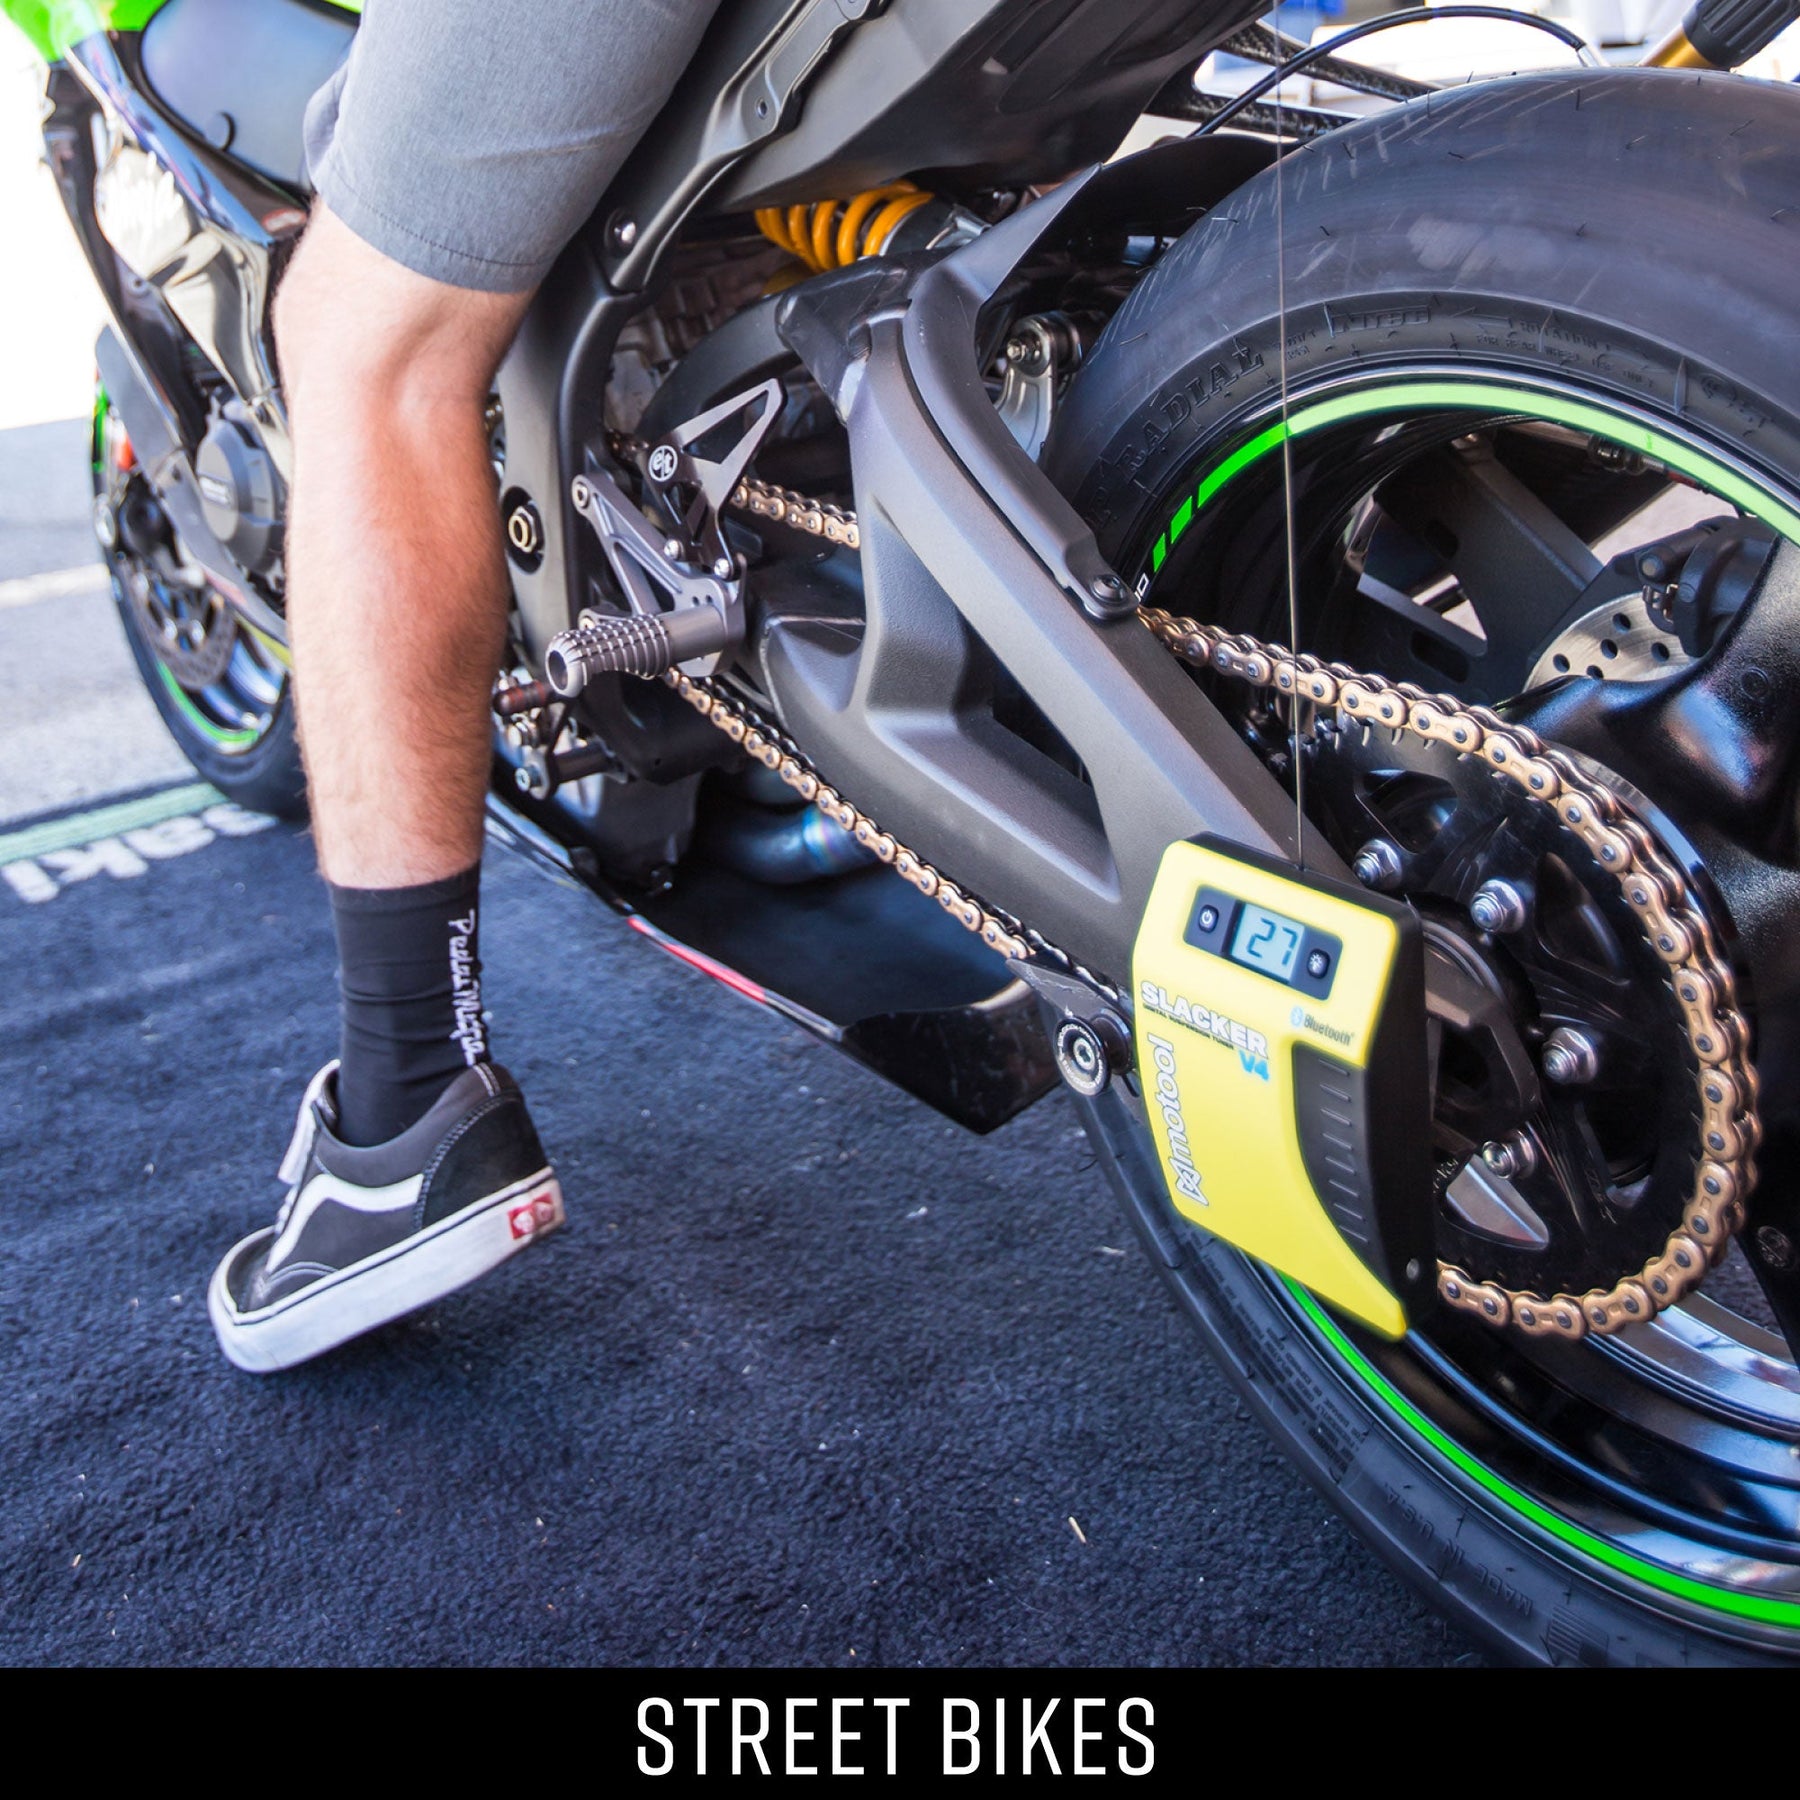 The Slacker digital suspension tuner works on street bikes.